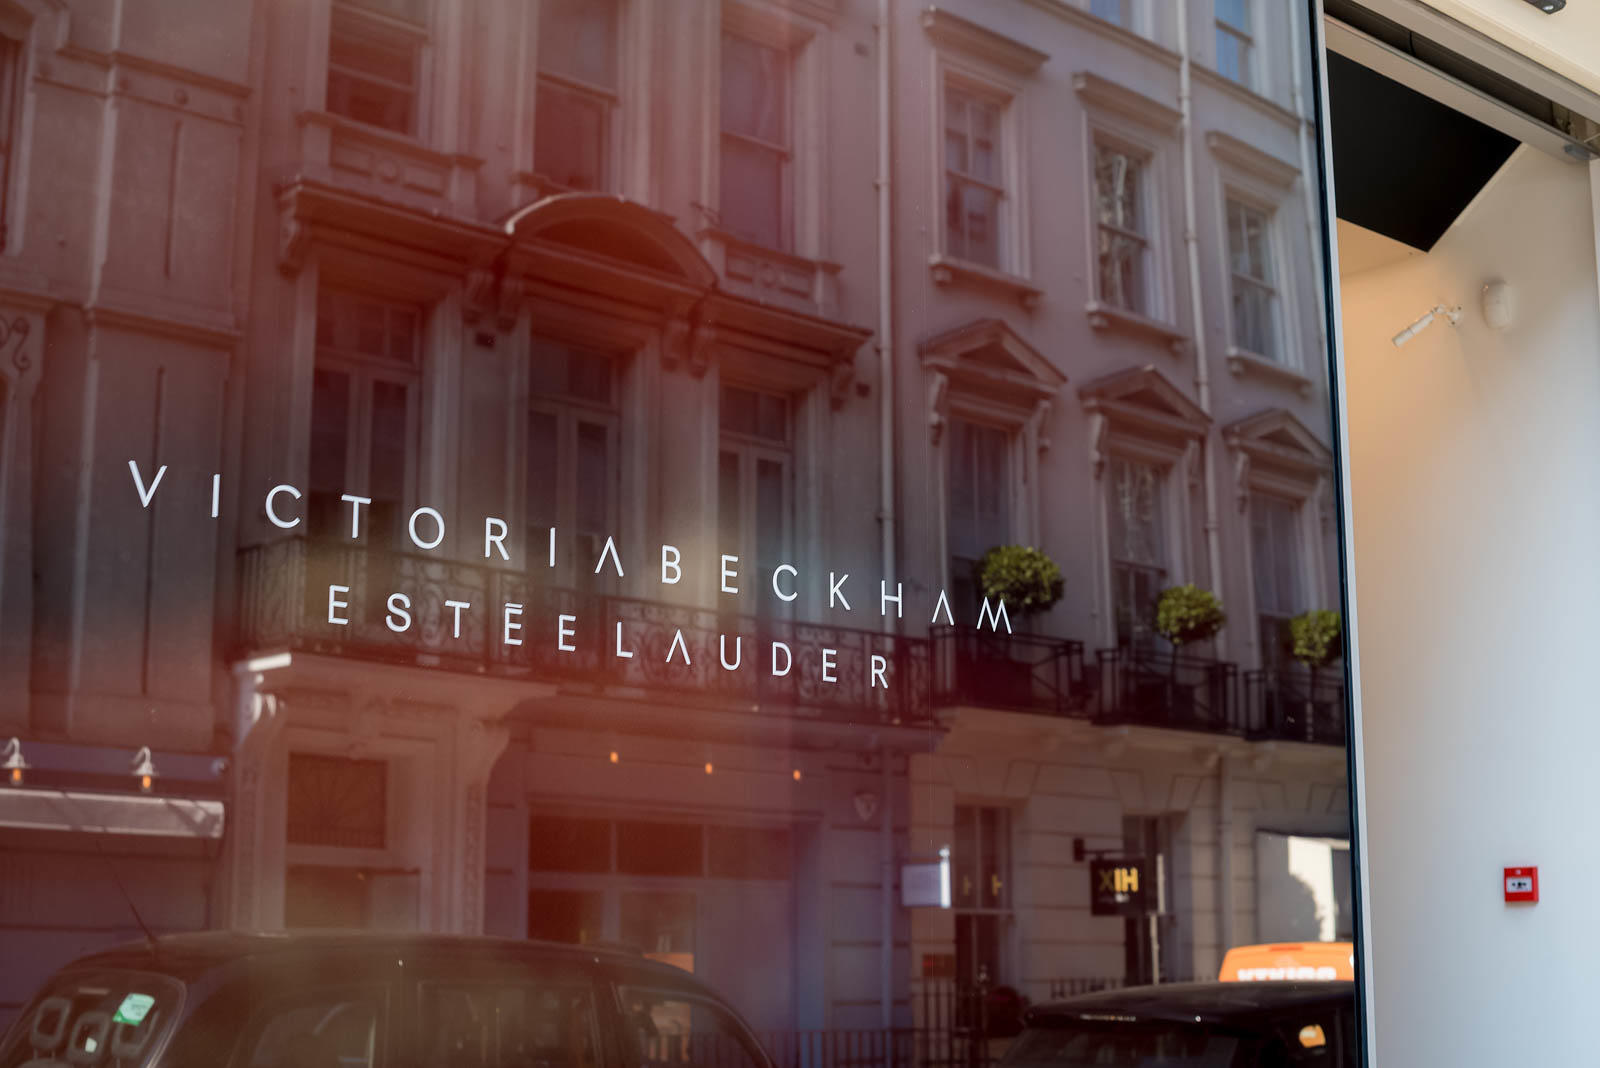 Victoria Beckham London Dover St Store